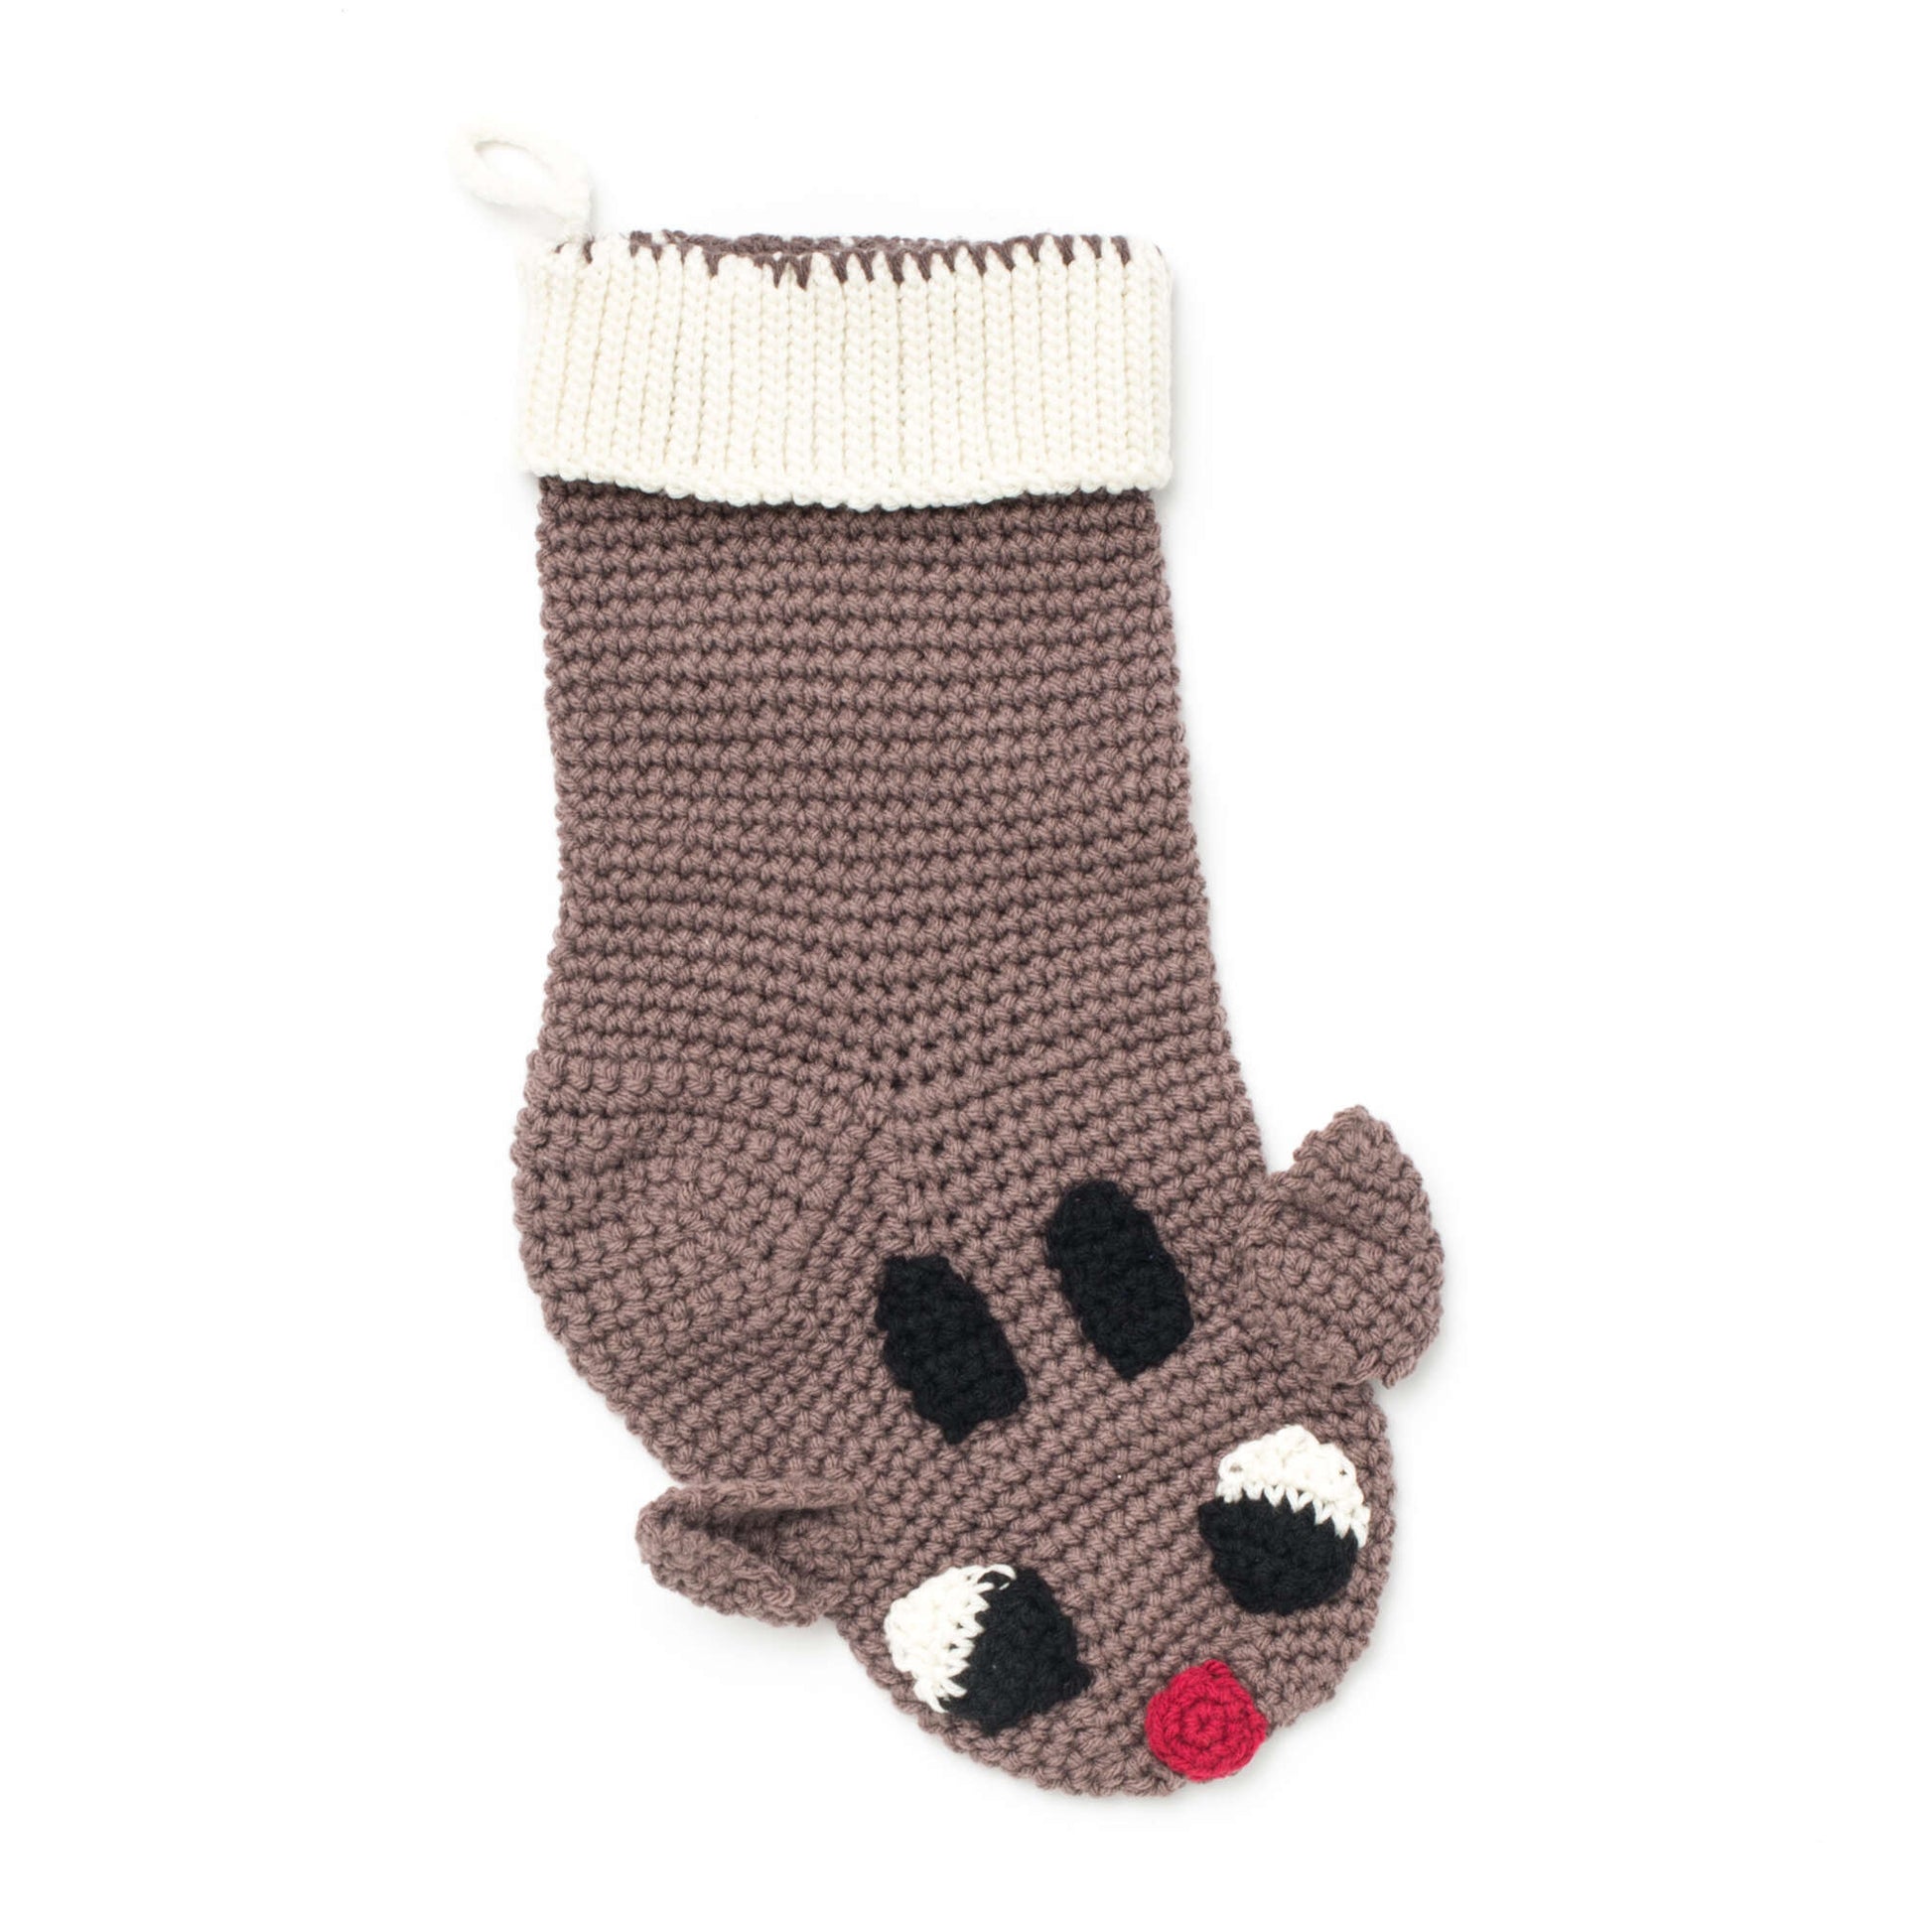 Free Bernat Reindeer Stocking Crochet Pattern